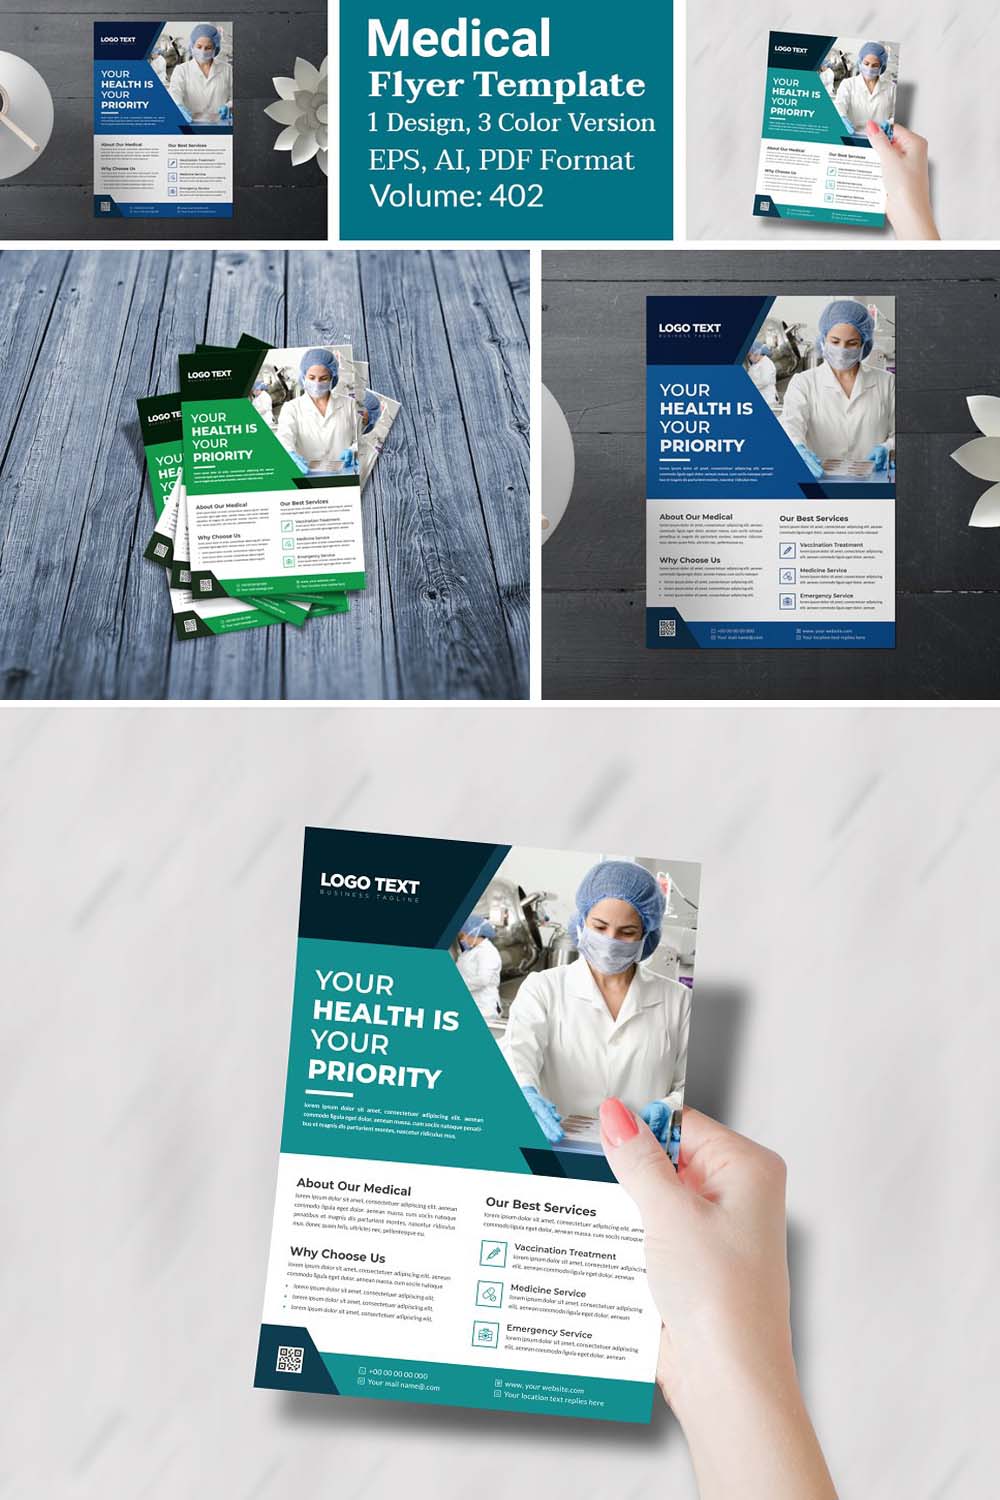 Medical Flyer Design Template pinterest preview image.